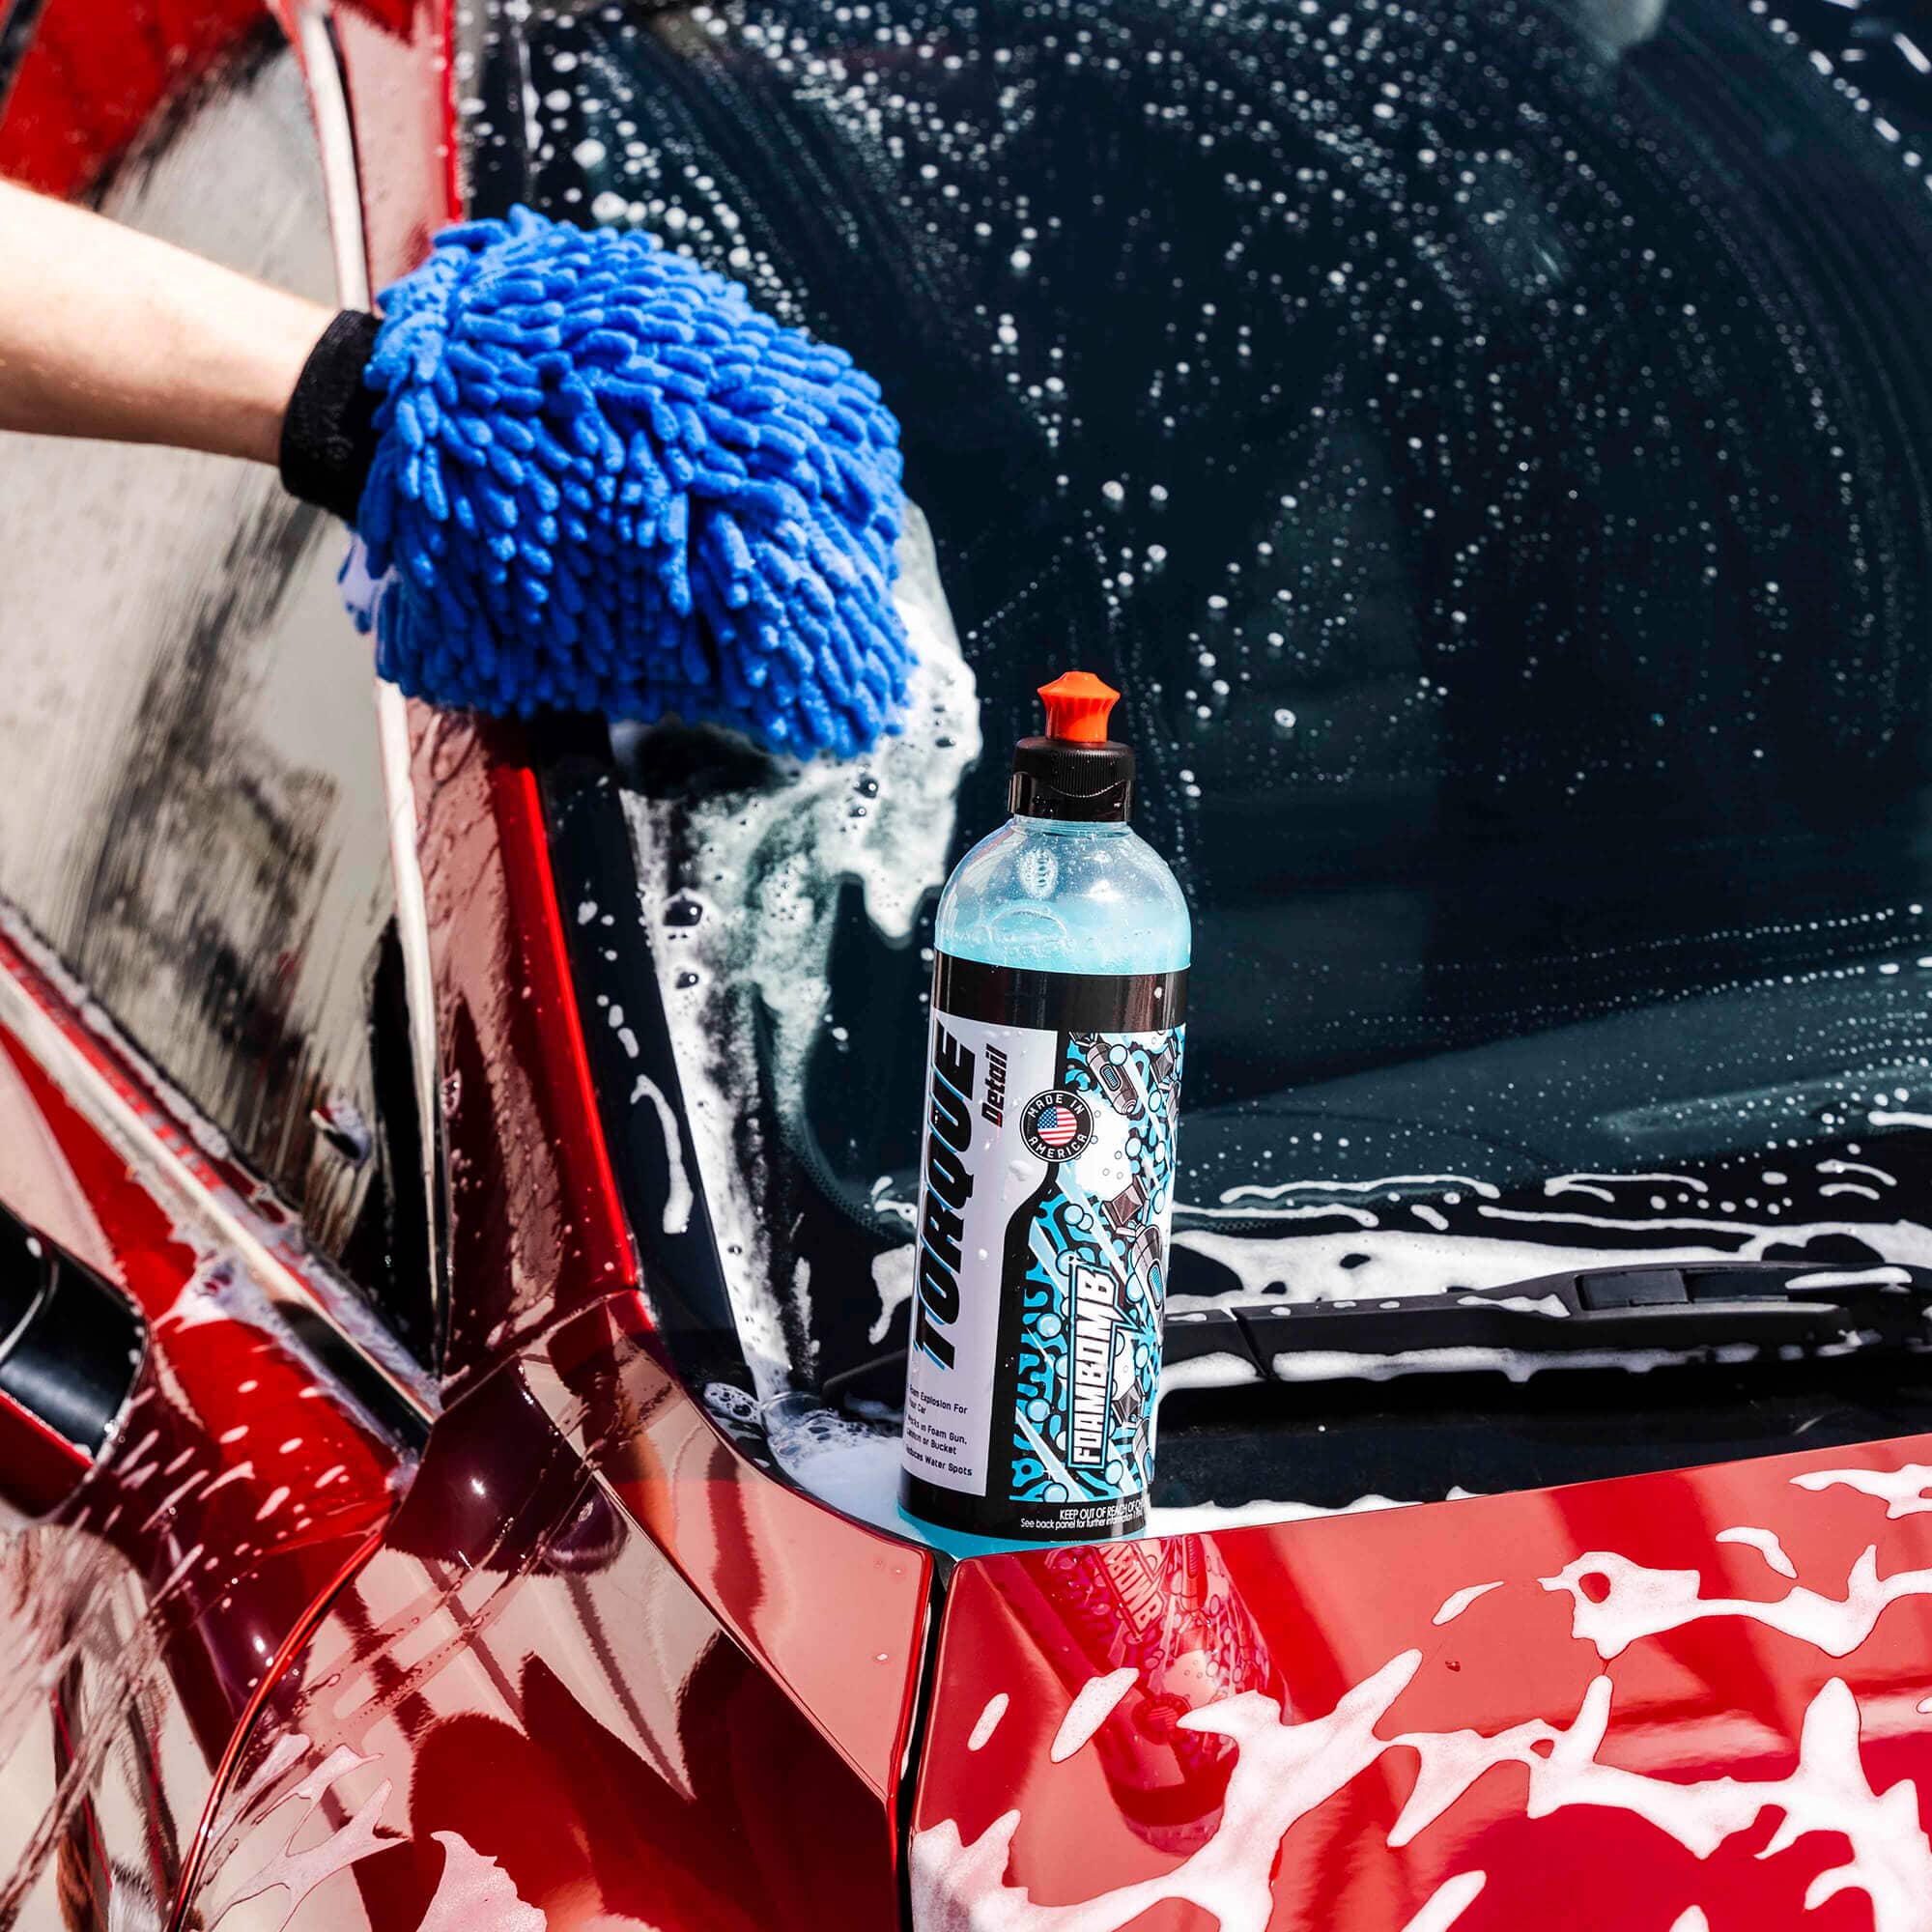 Car Shampoo in Car Wash 